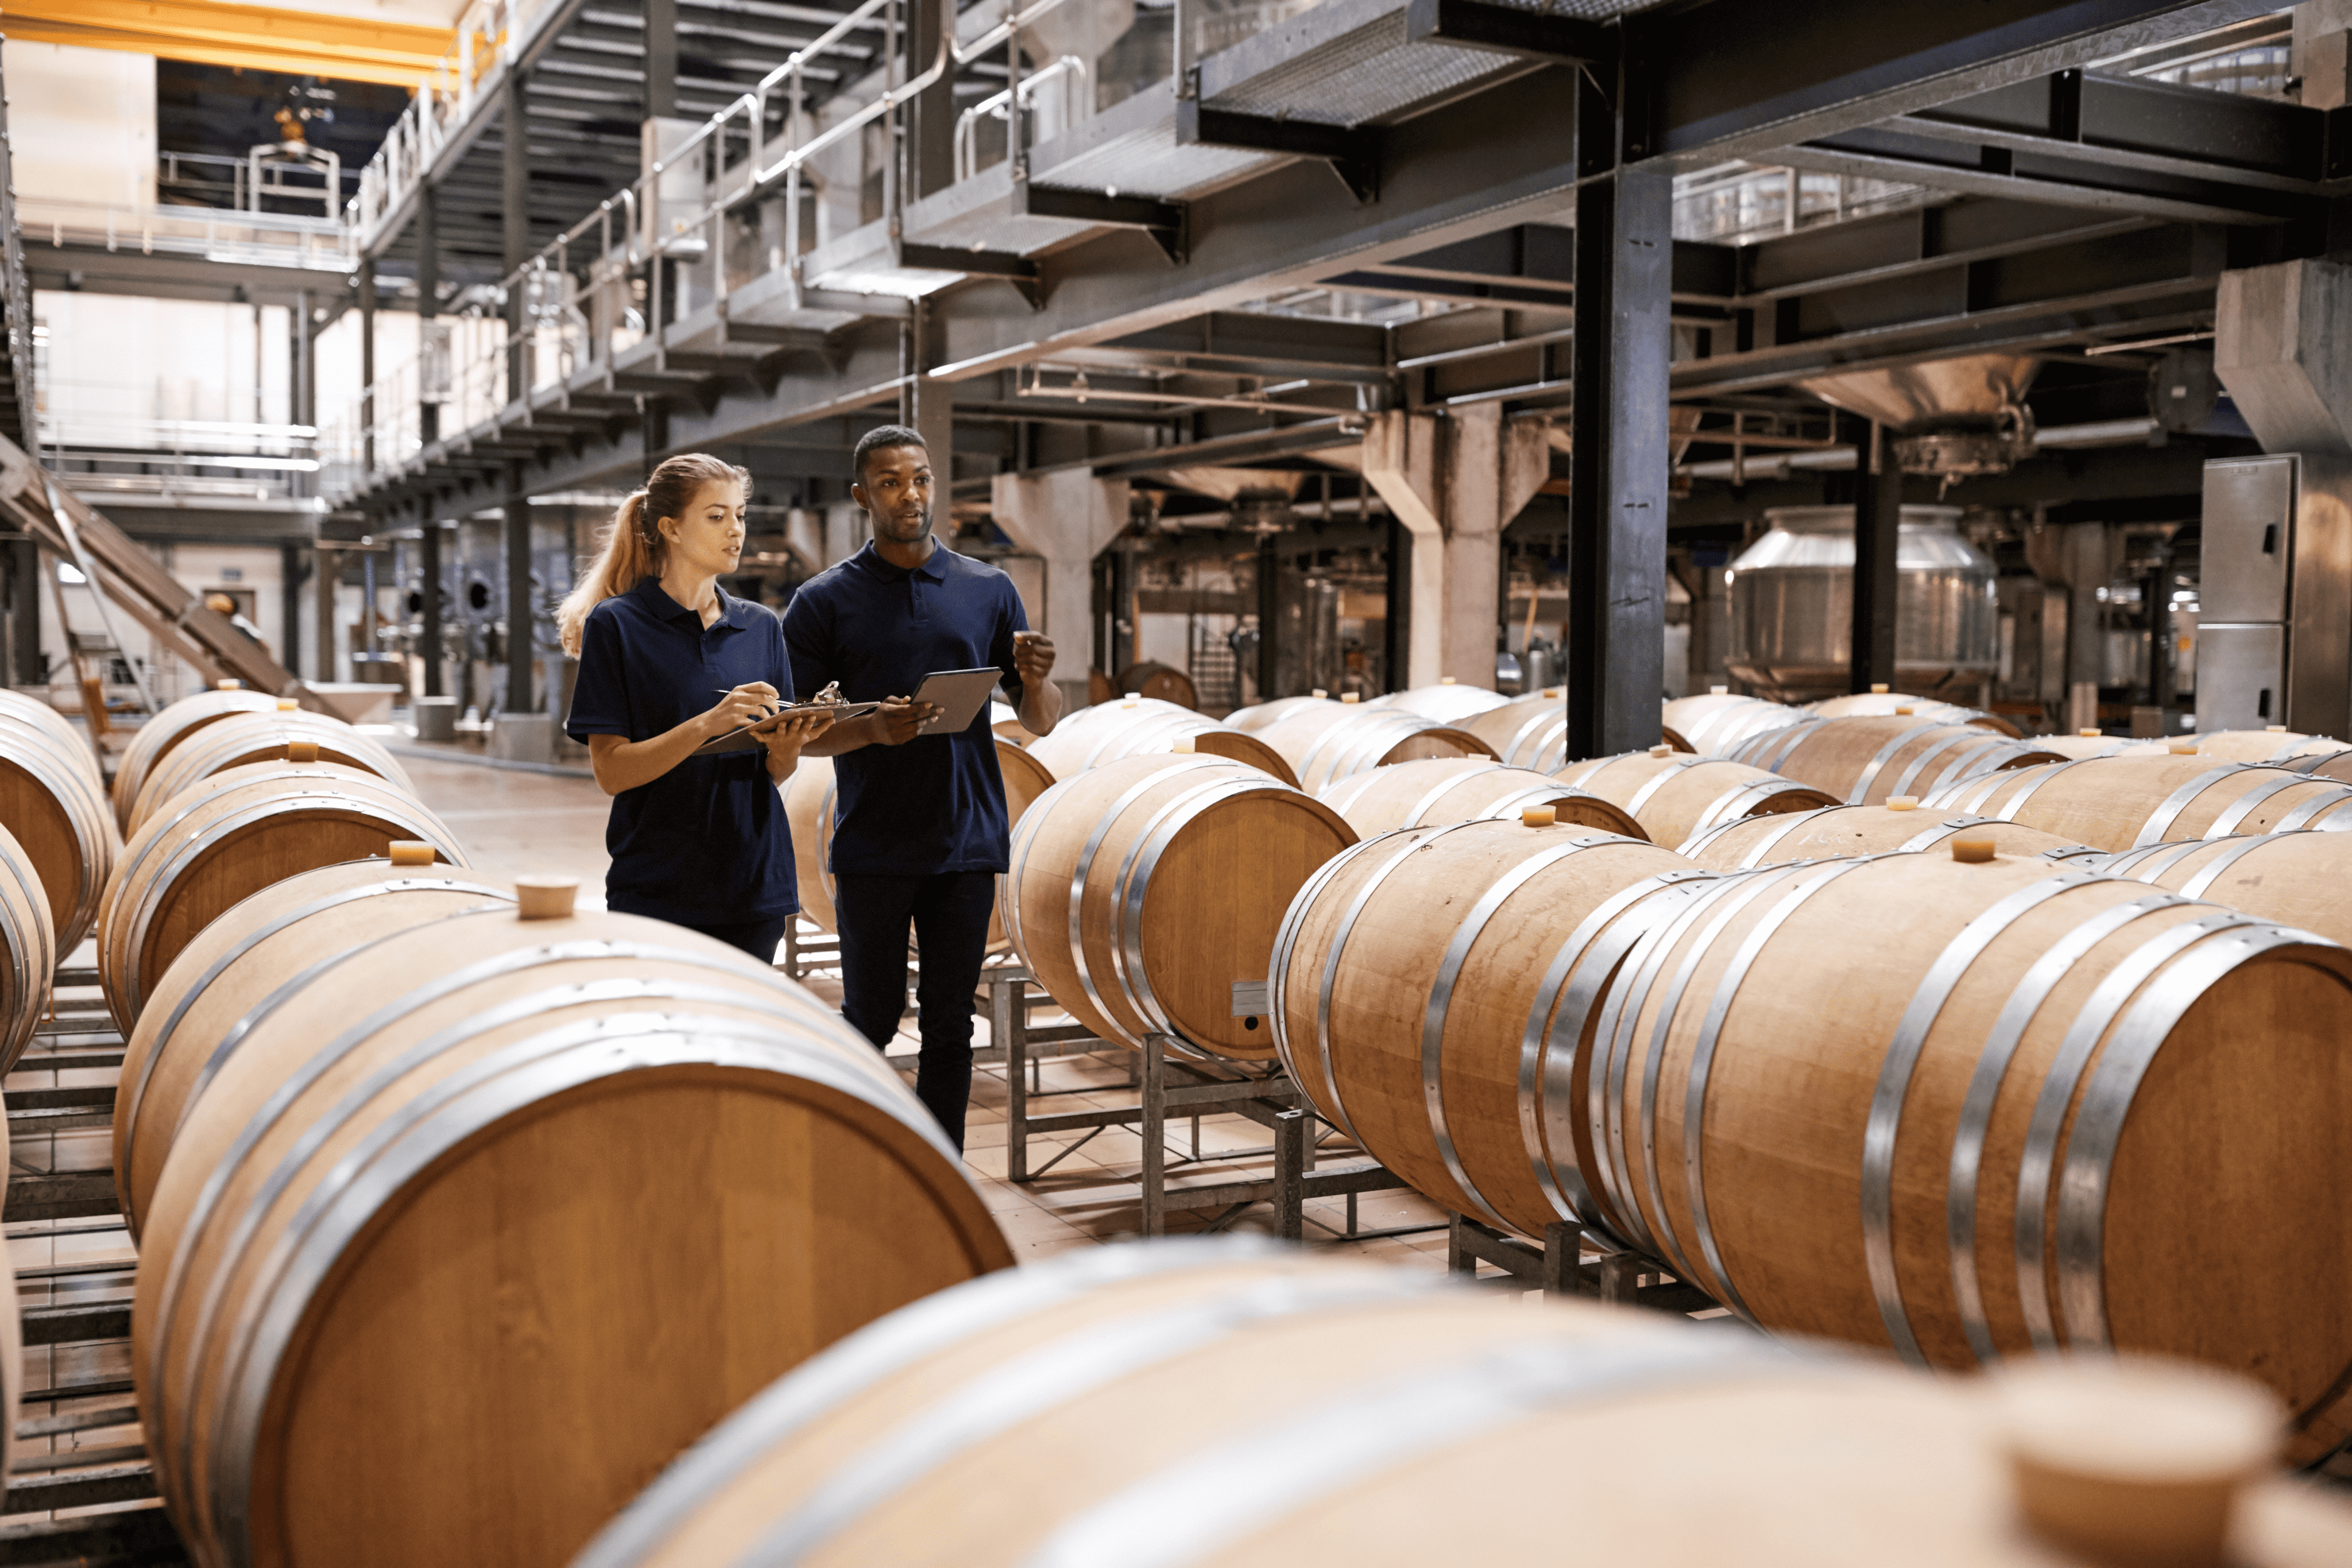 Two employees assessing wine barrels inside factory.